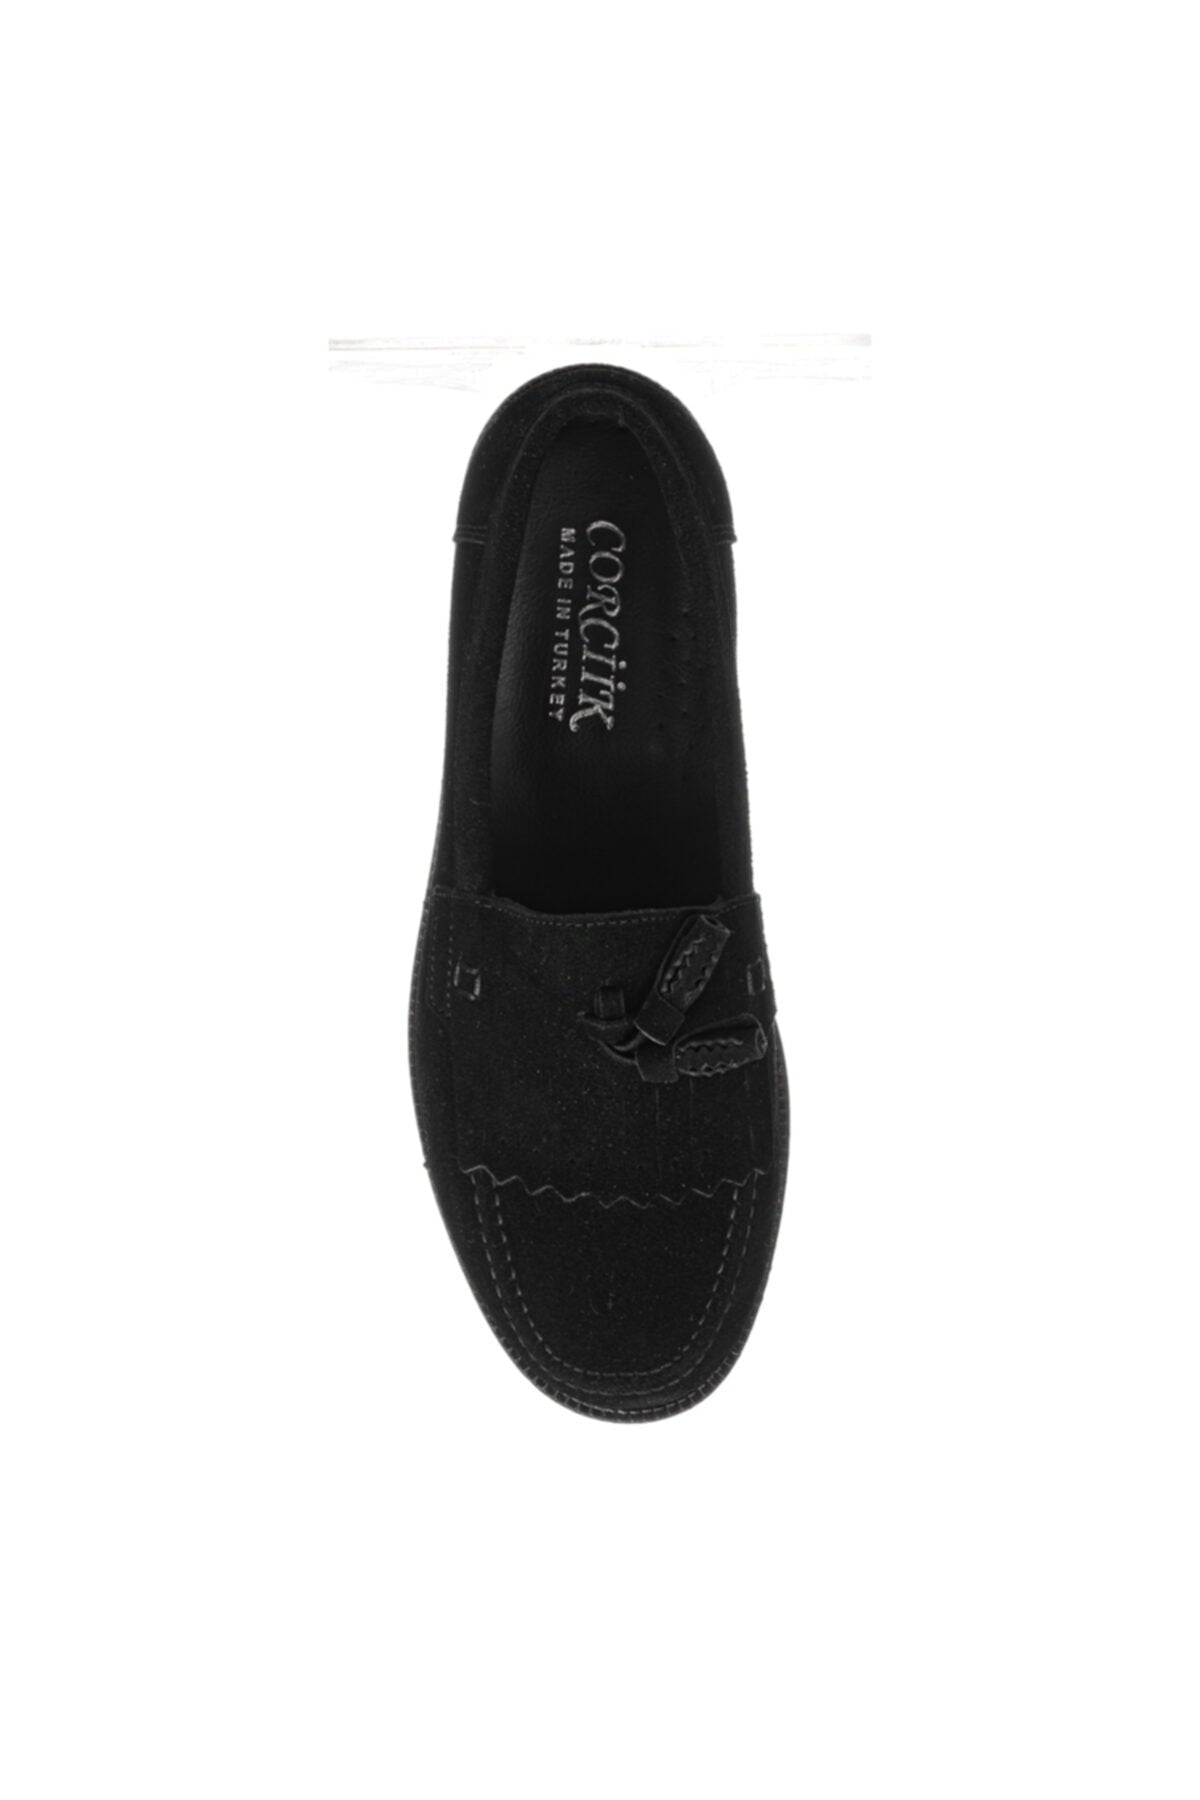 Men's Black Classic Daily Shoes Loafer Süet